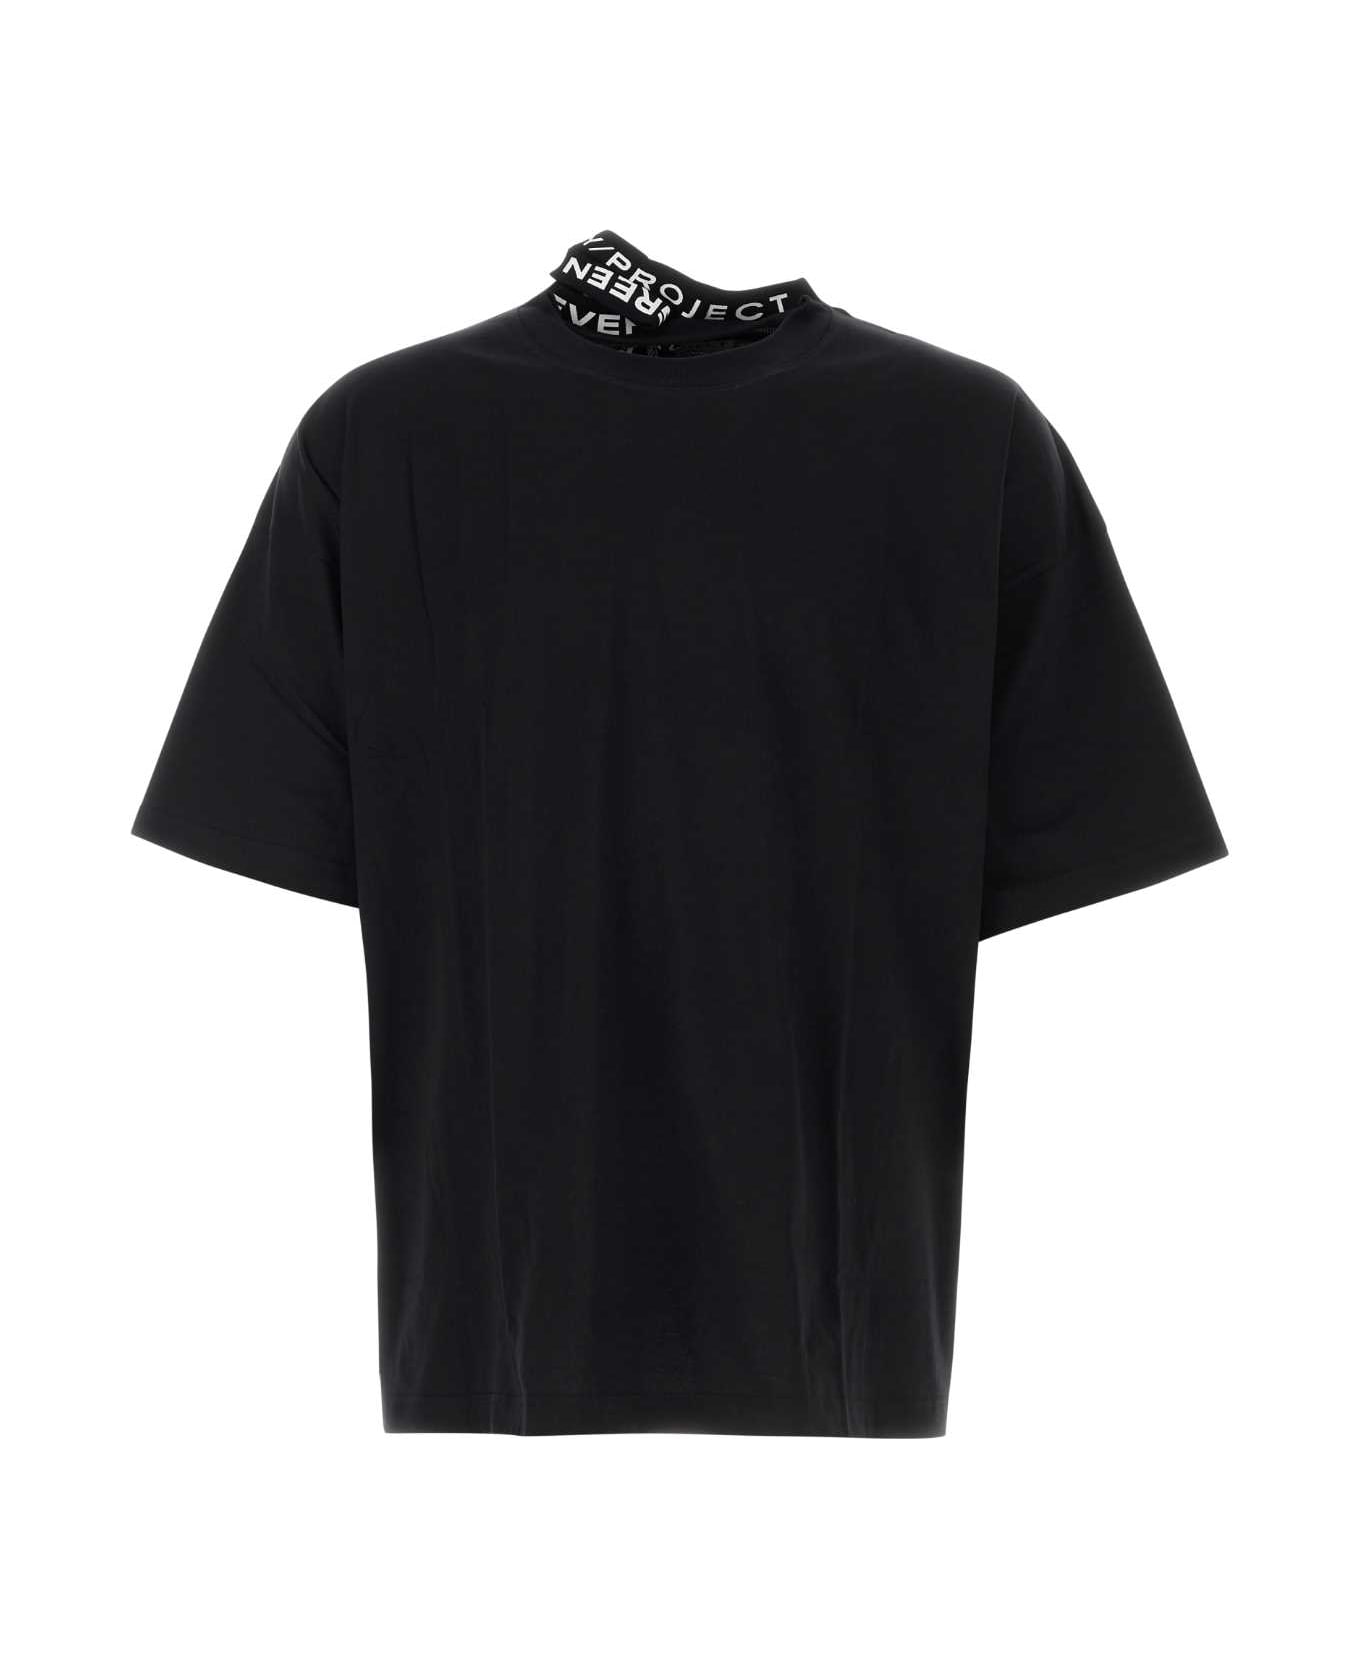 Y/Project Black Cotton T-shirt - EVERGREEN VINTAGE BLACK